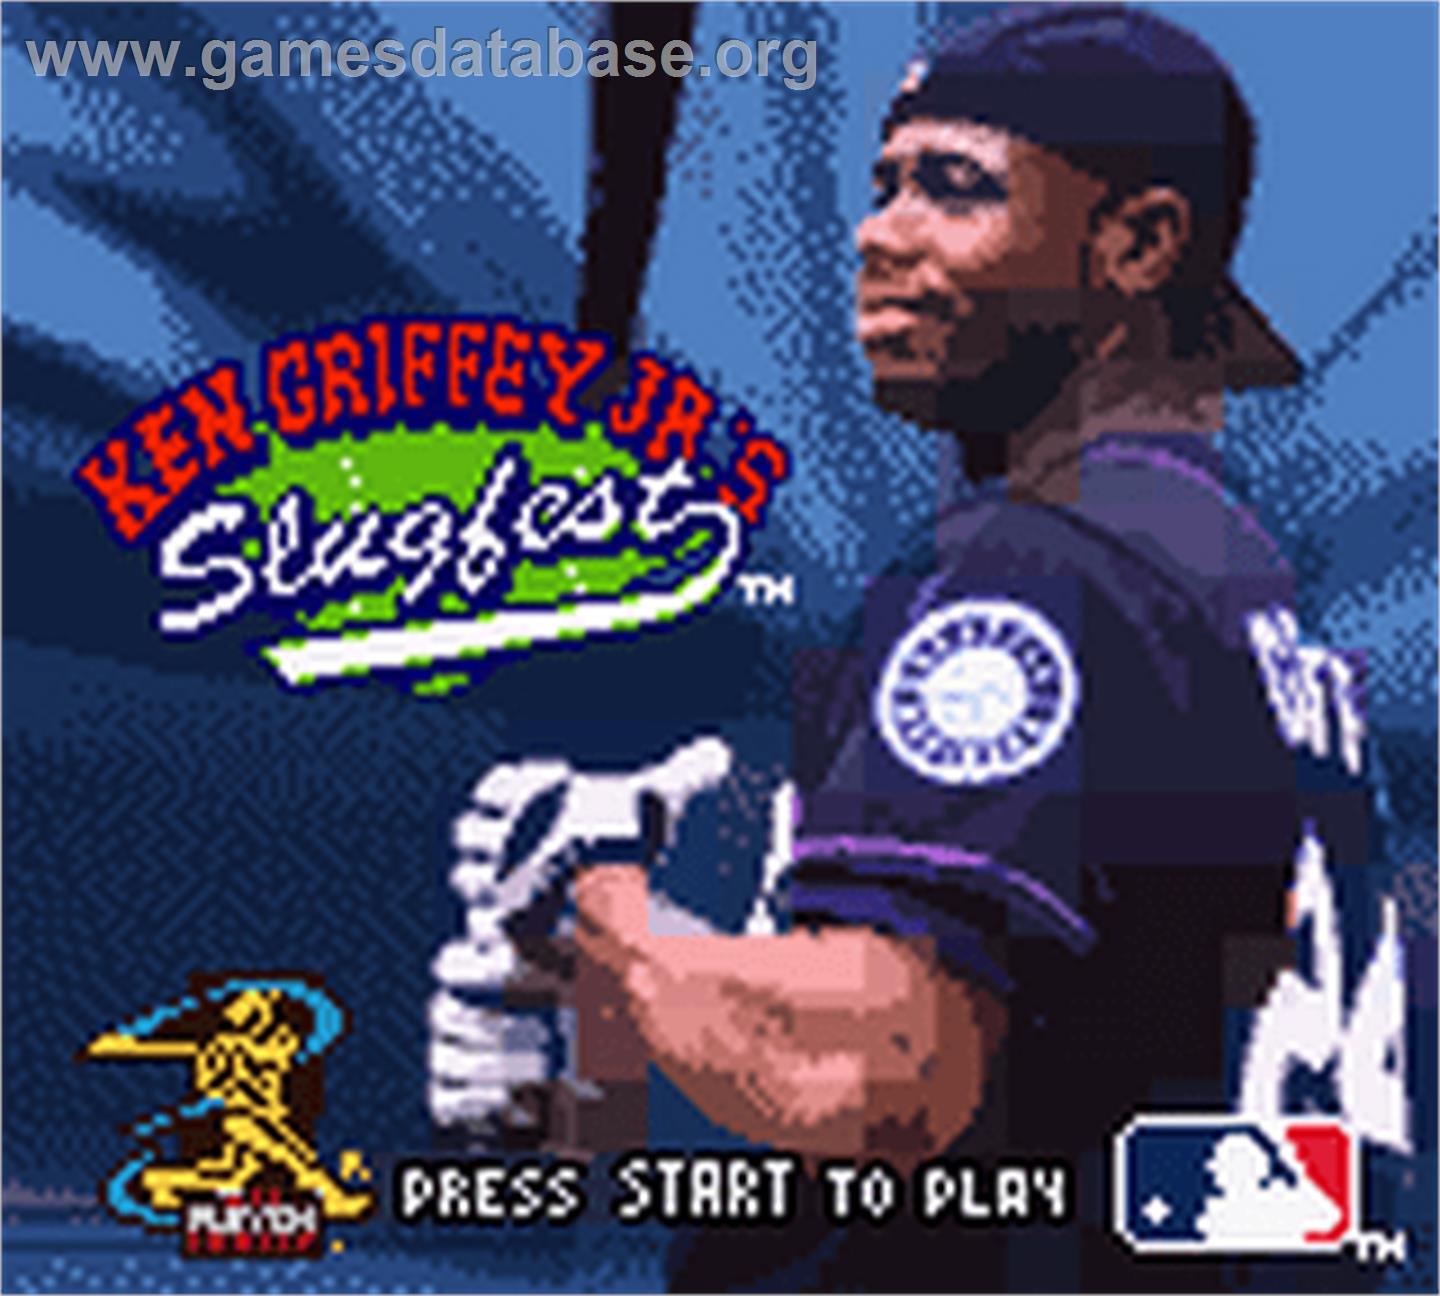 Ken Griffey Jr.'s Slugfest - Nintendo Game Boy Color - Artwork - Title Screen